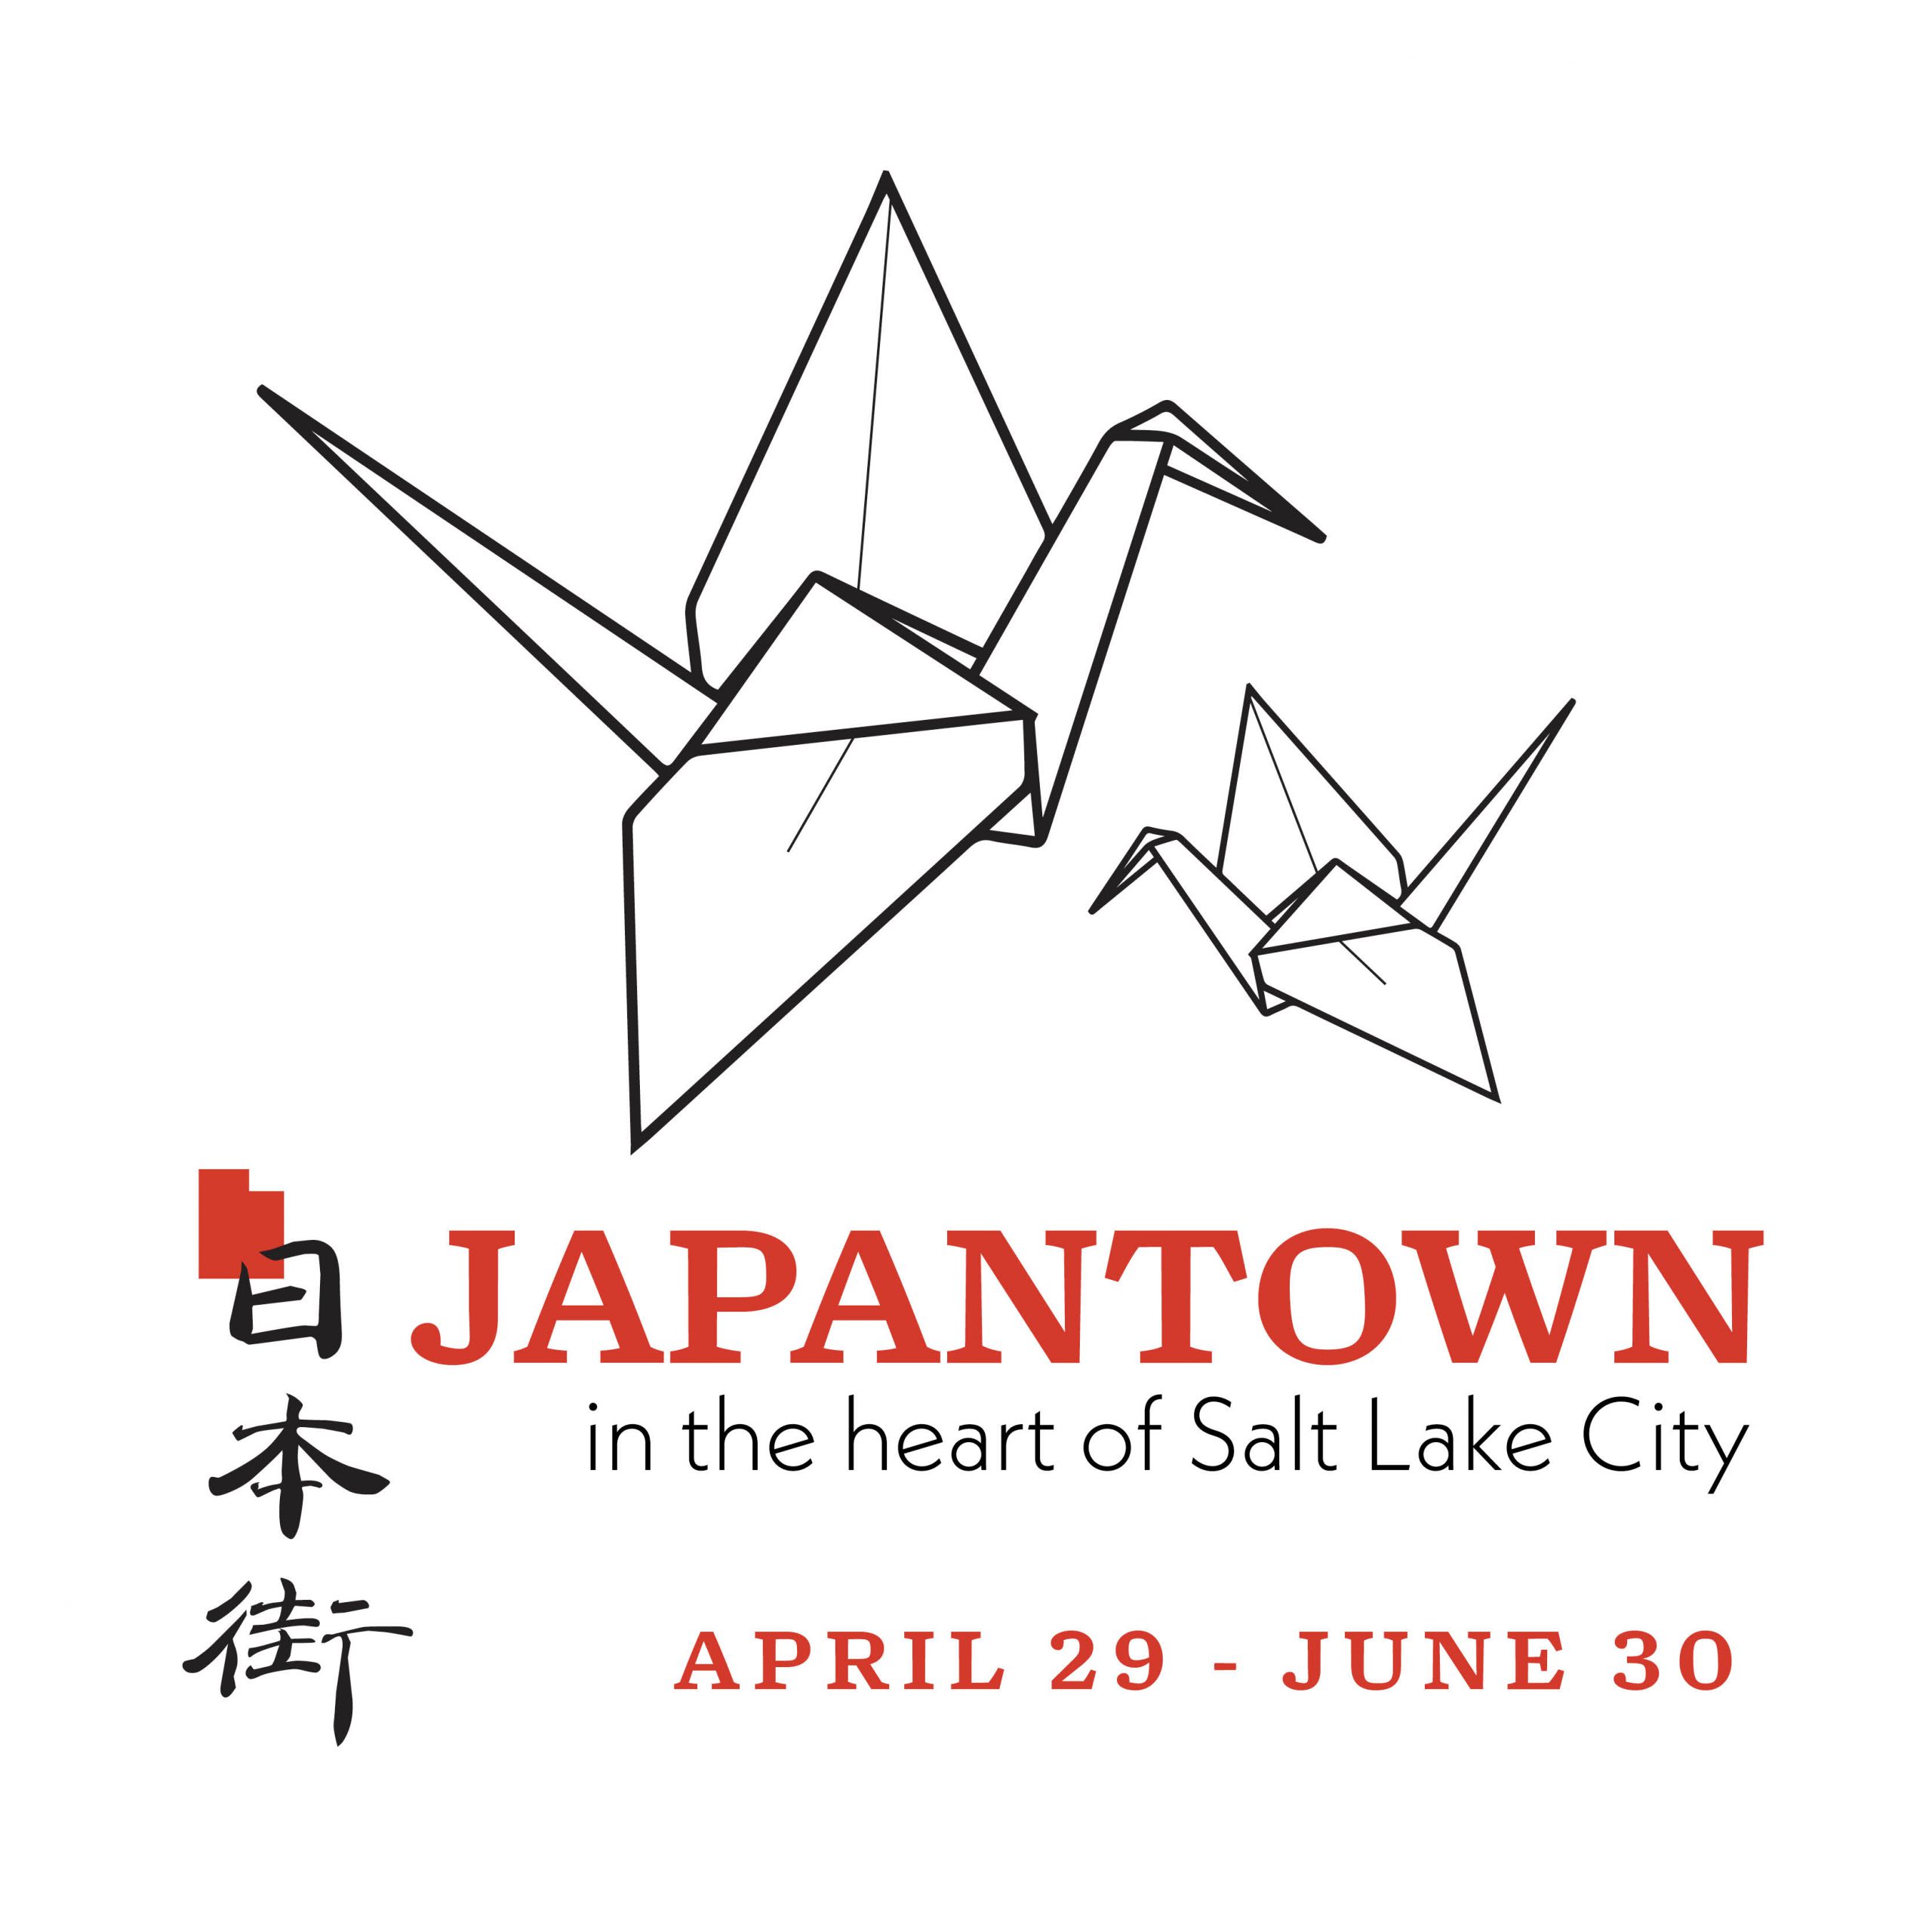 Japantown in the heart of Salt Lake City.